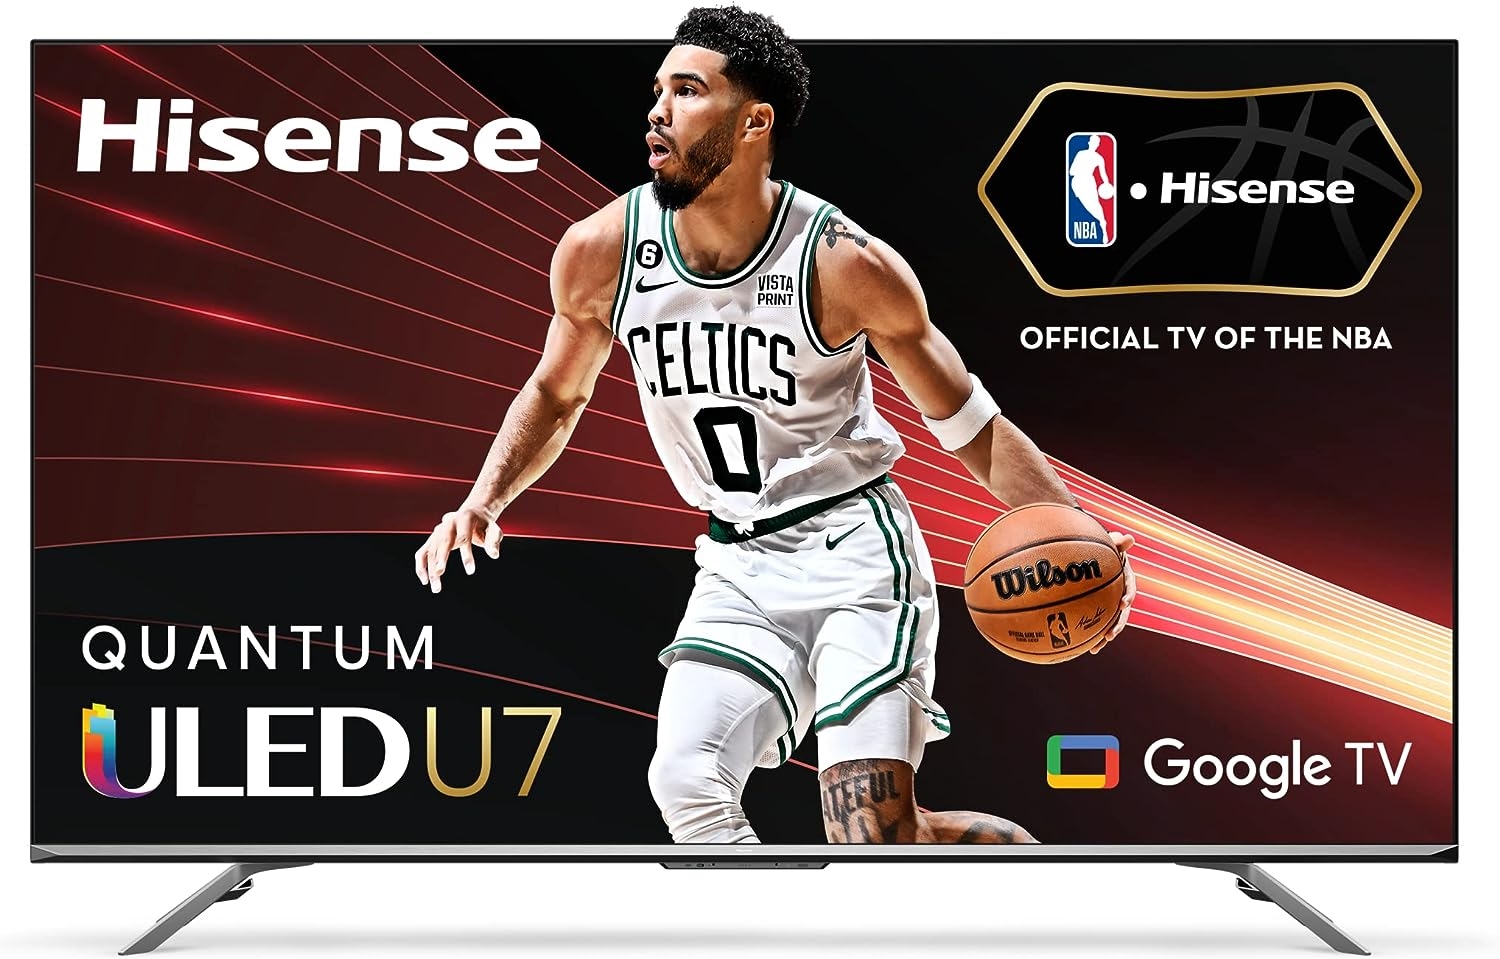 Hisense U7H QLED Series 4K Smart TV